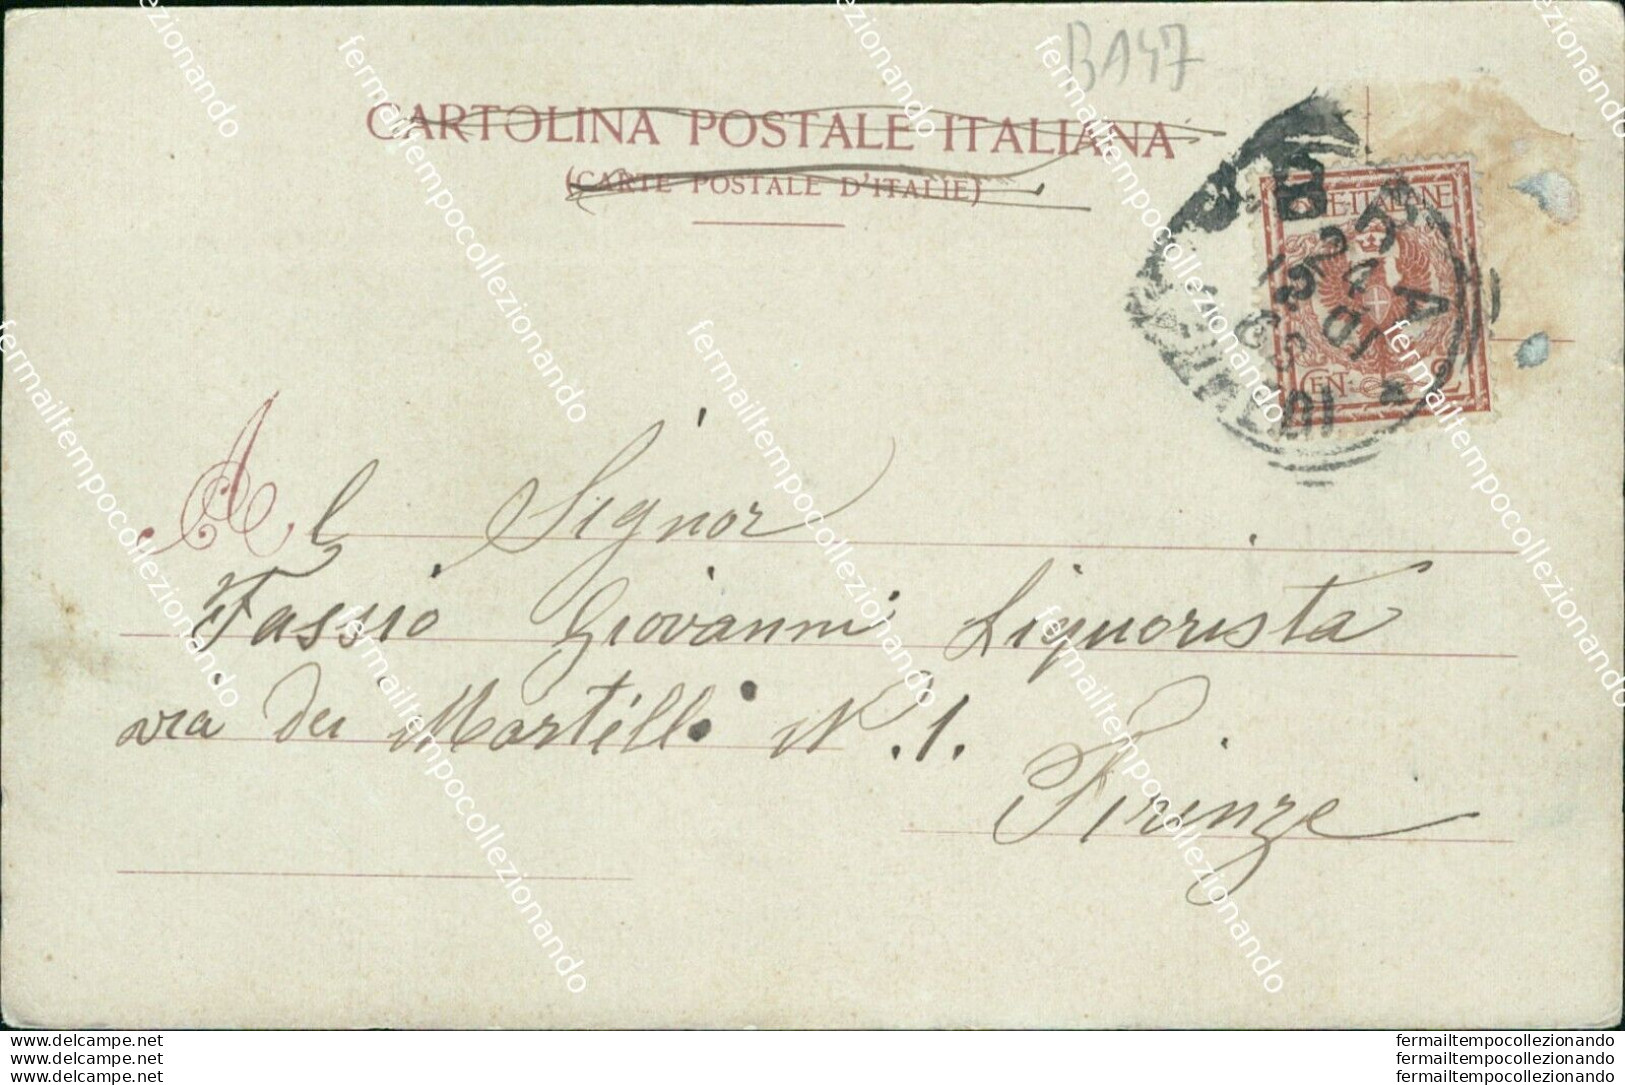 Ba47 Cartolina Bra Panorama Stazione Treno Cuneo Piemonte Bella!! 1901 - Cuneo